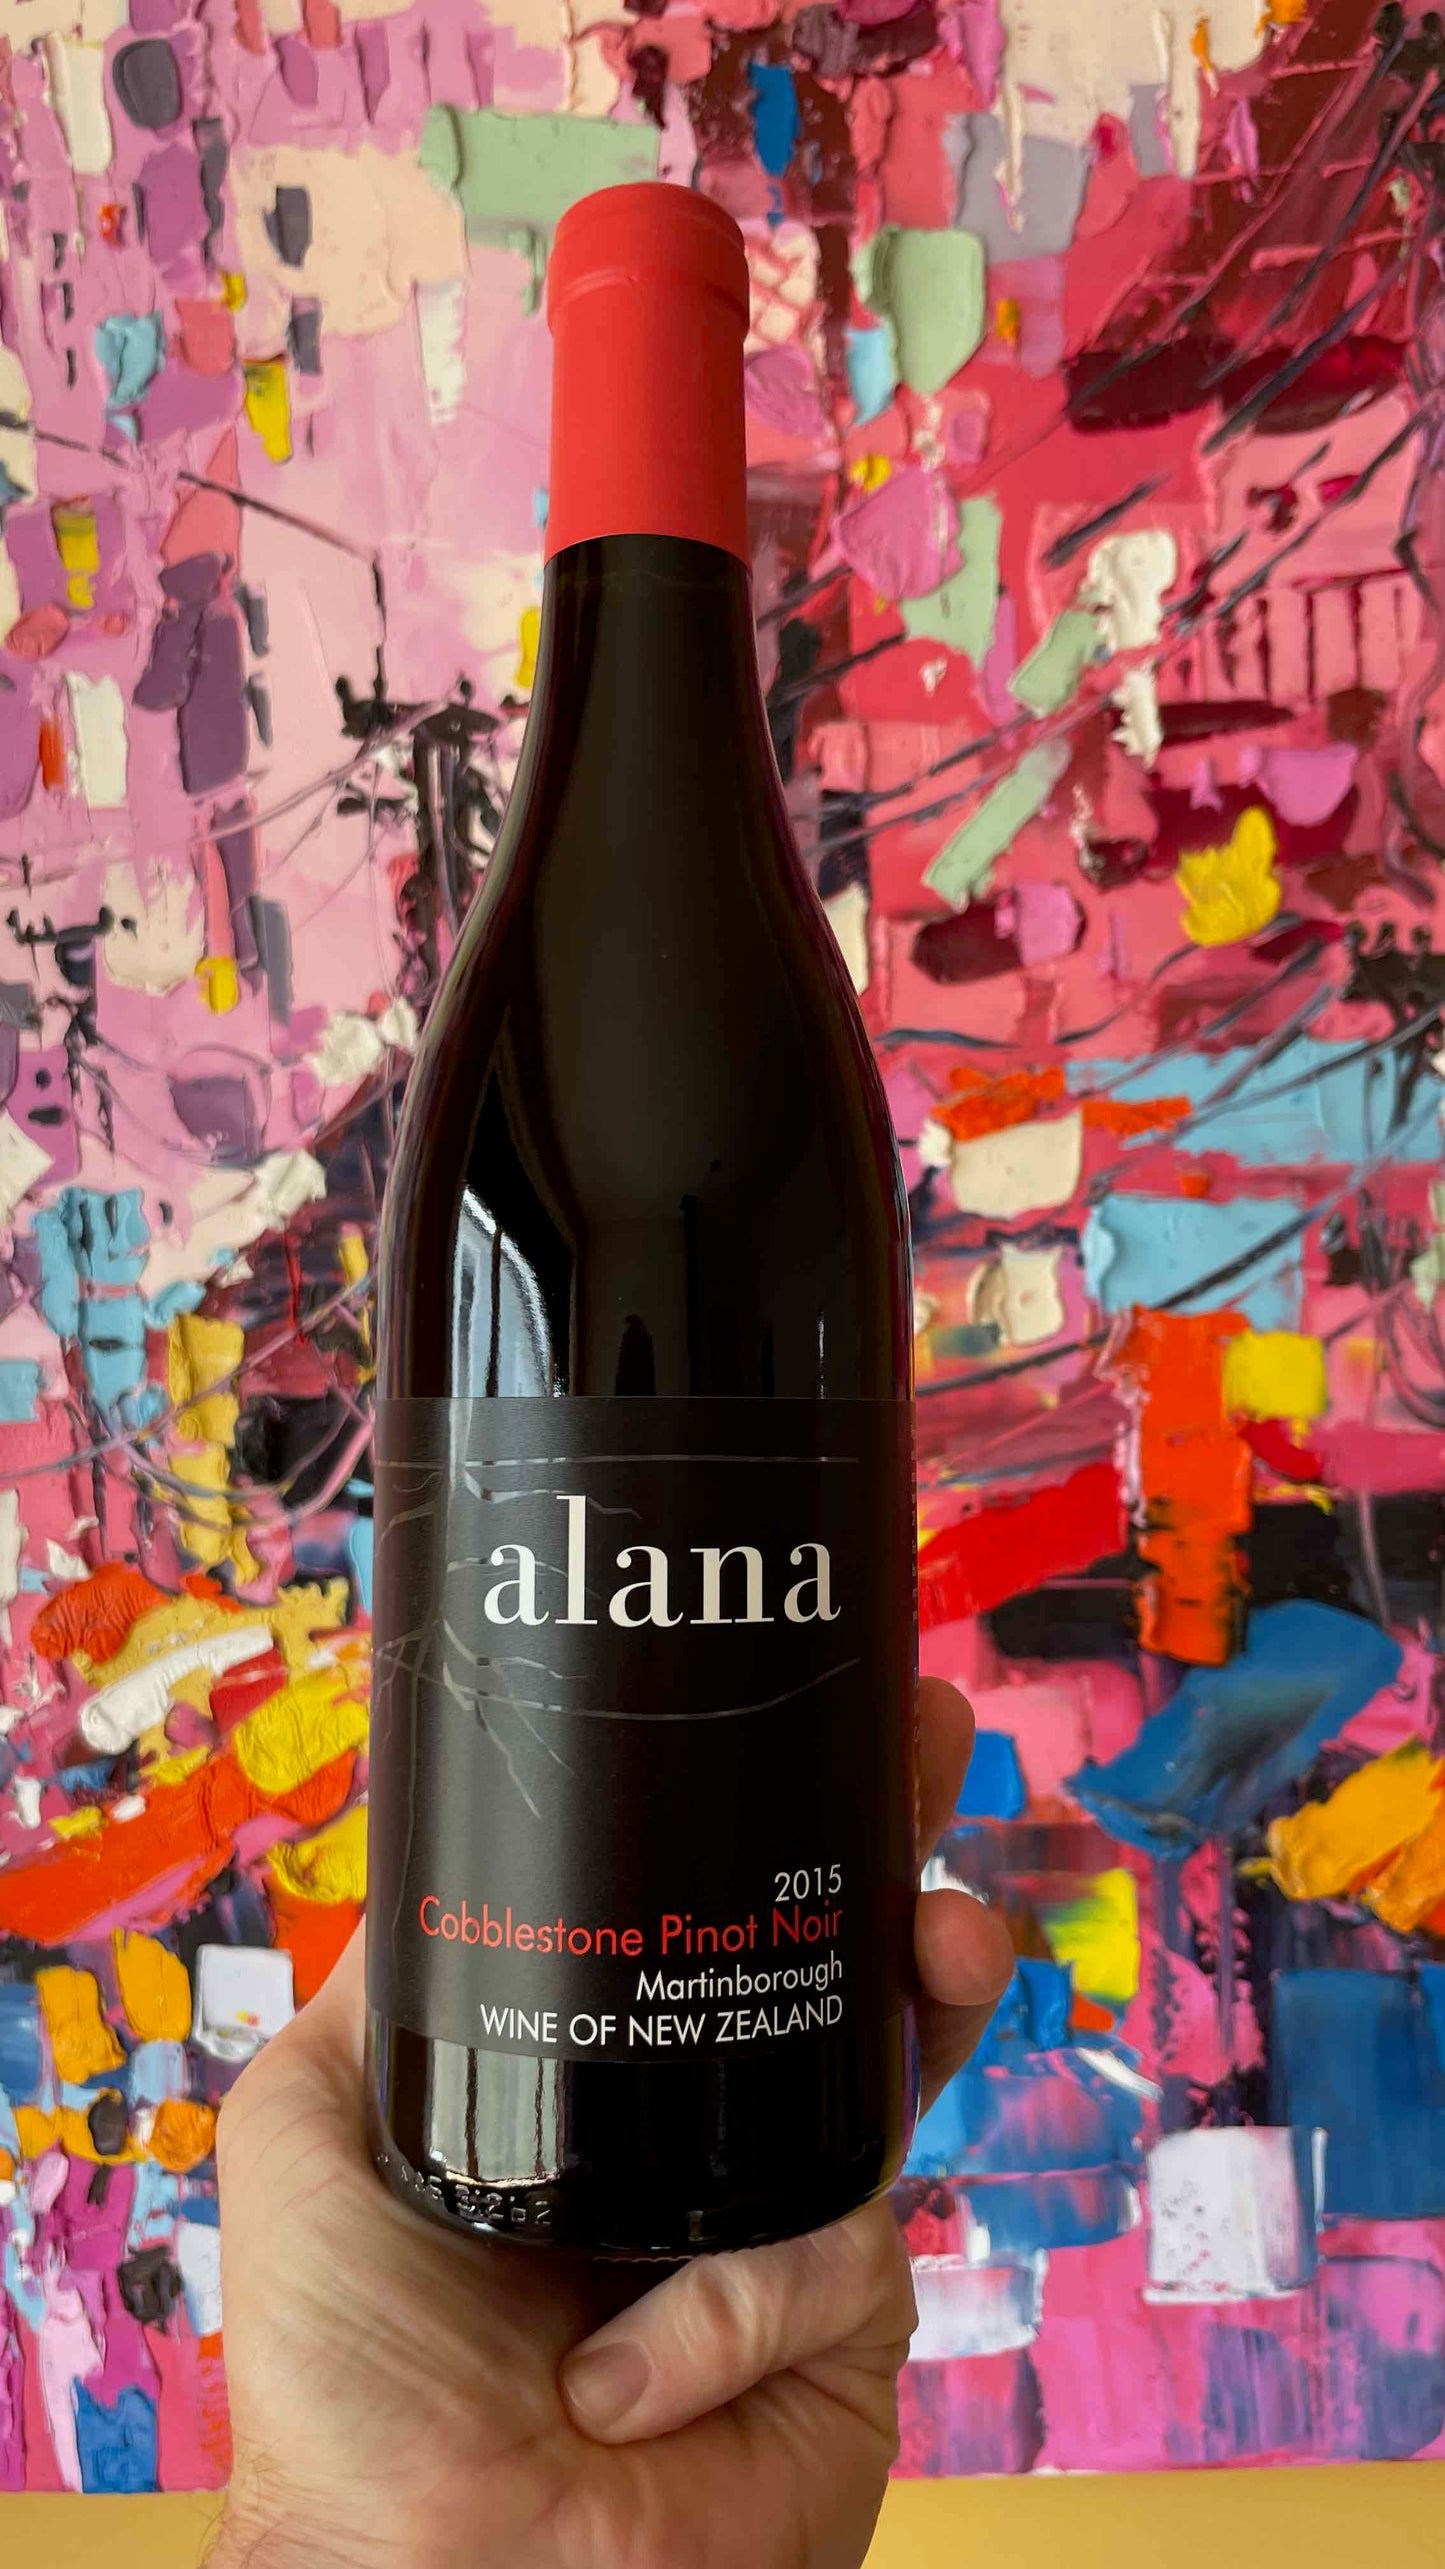 Alana Cobblestone Pinot Noir, 2015